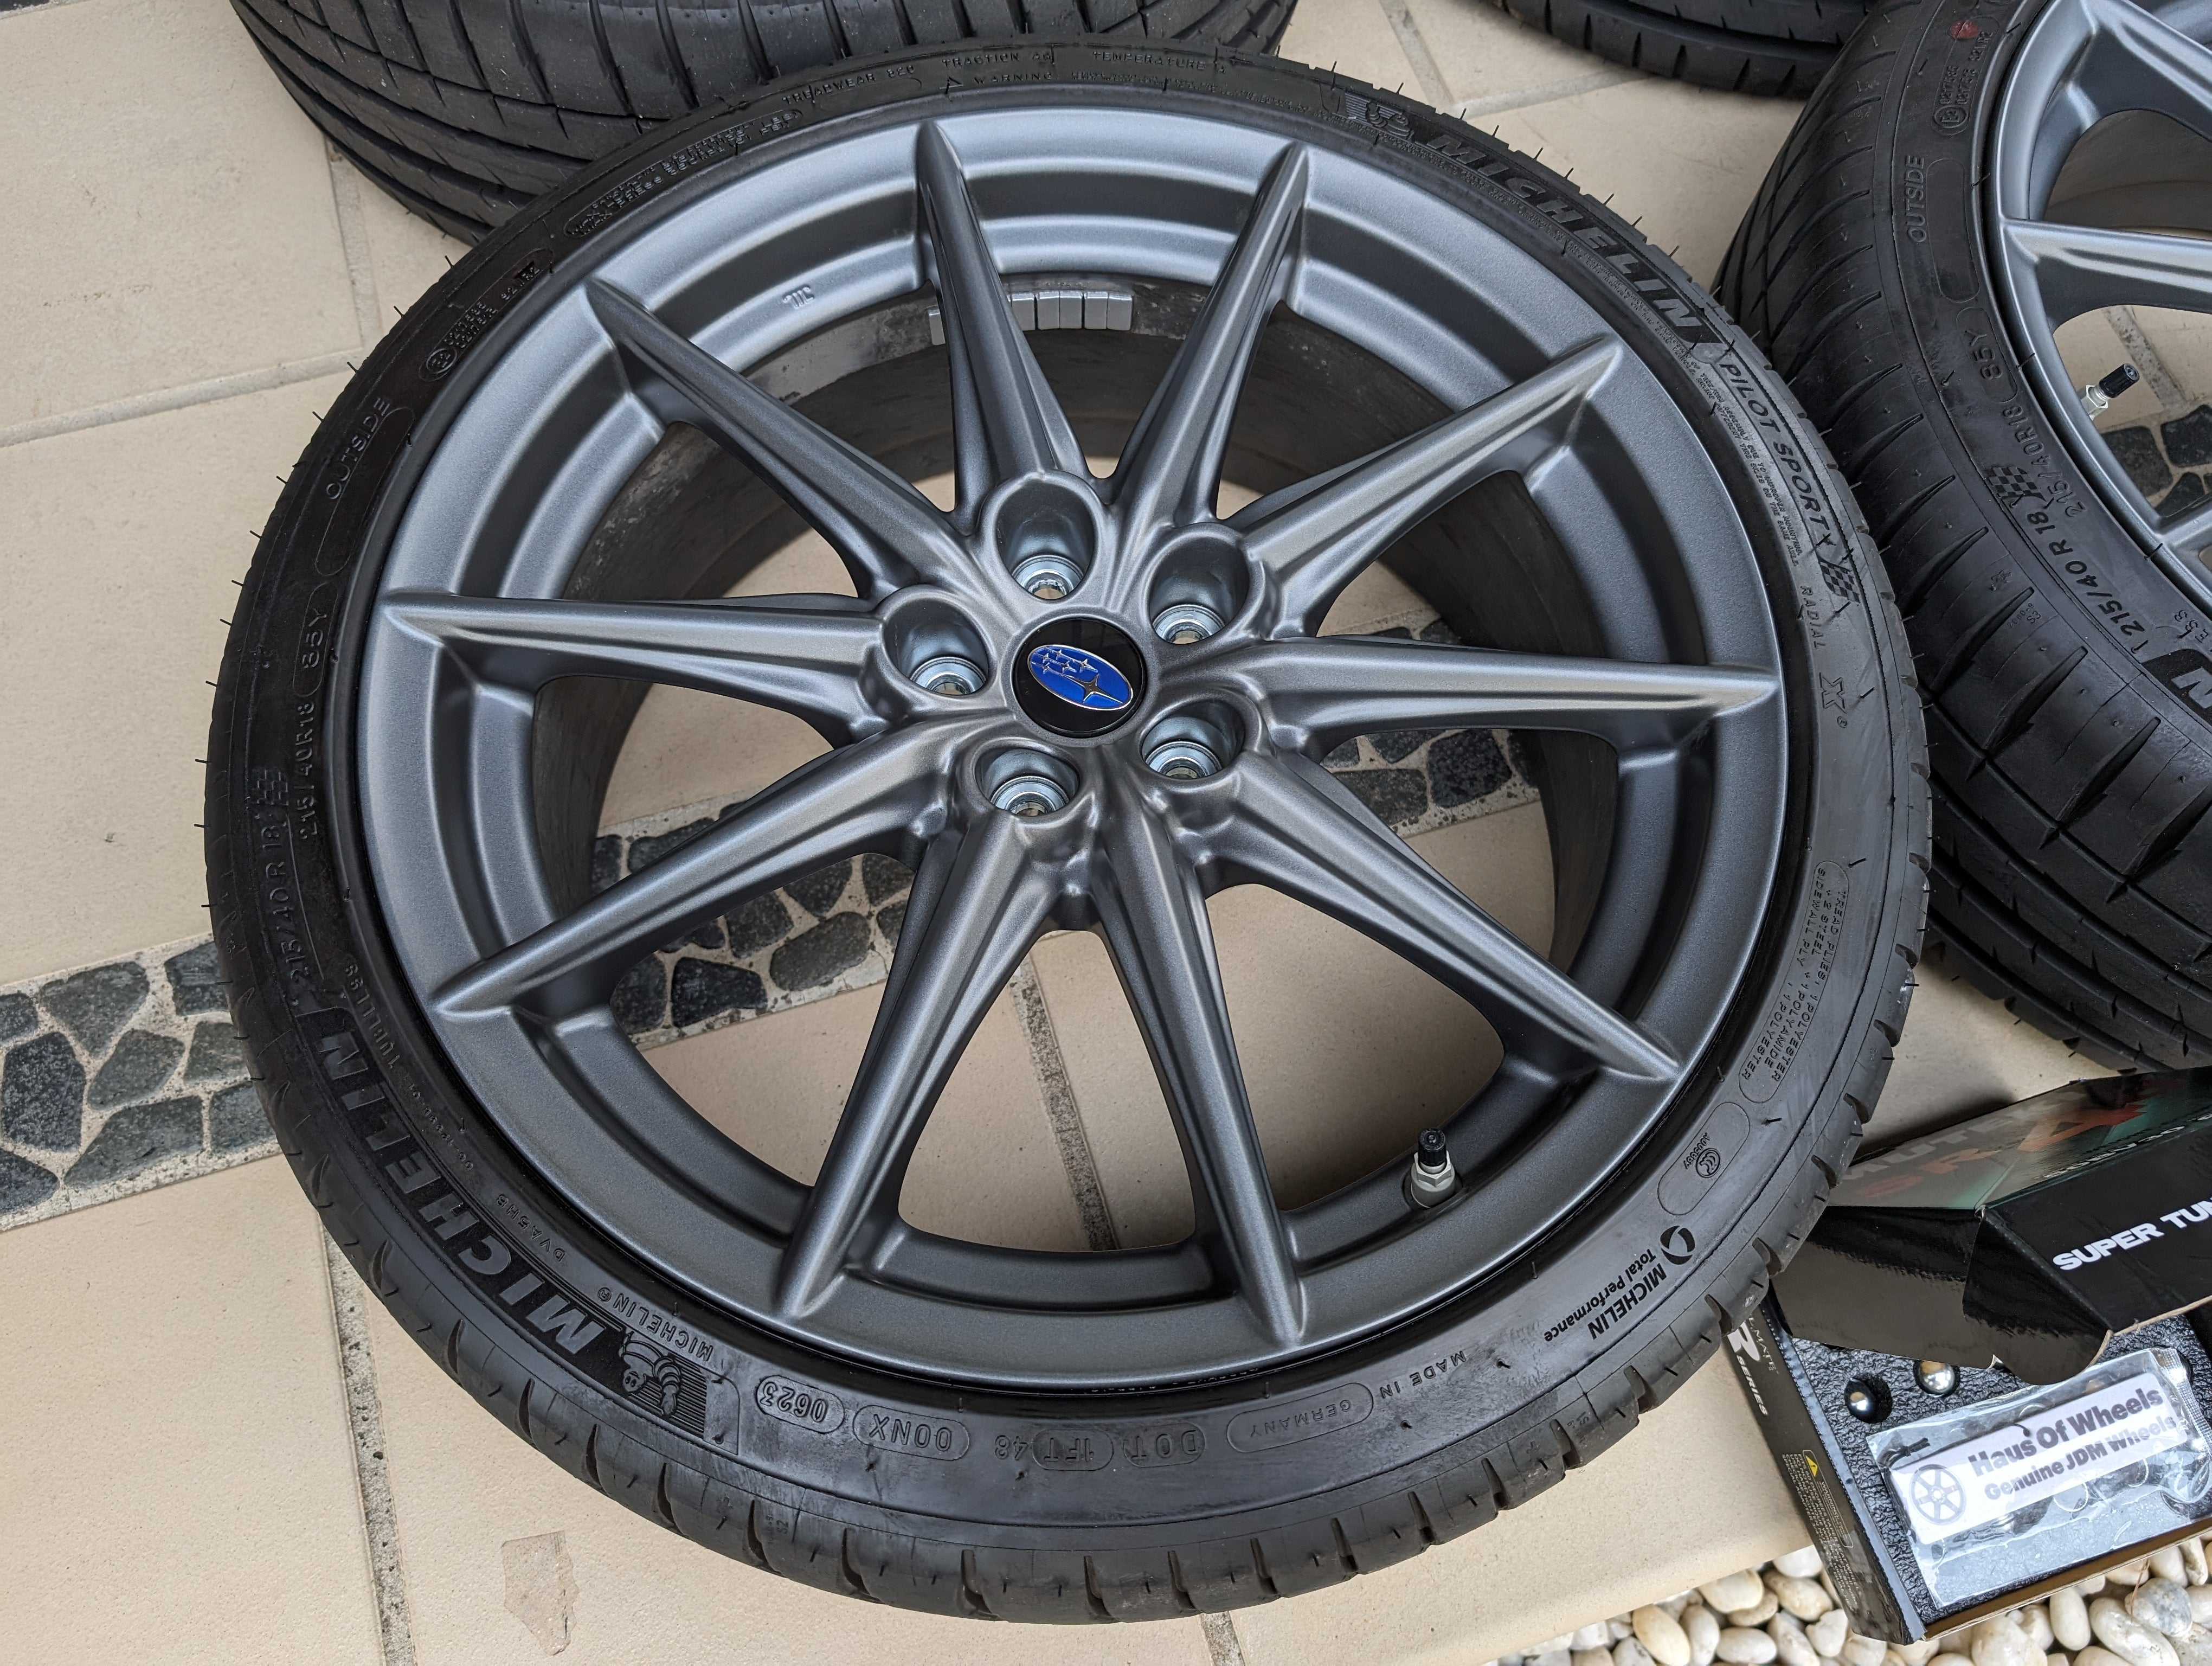 Subaru BRZ S Wheels with Near New Michelin PS4 Tyres and Genuine Subaru Center Caps - 5x100 - 18x7.5 +48